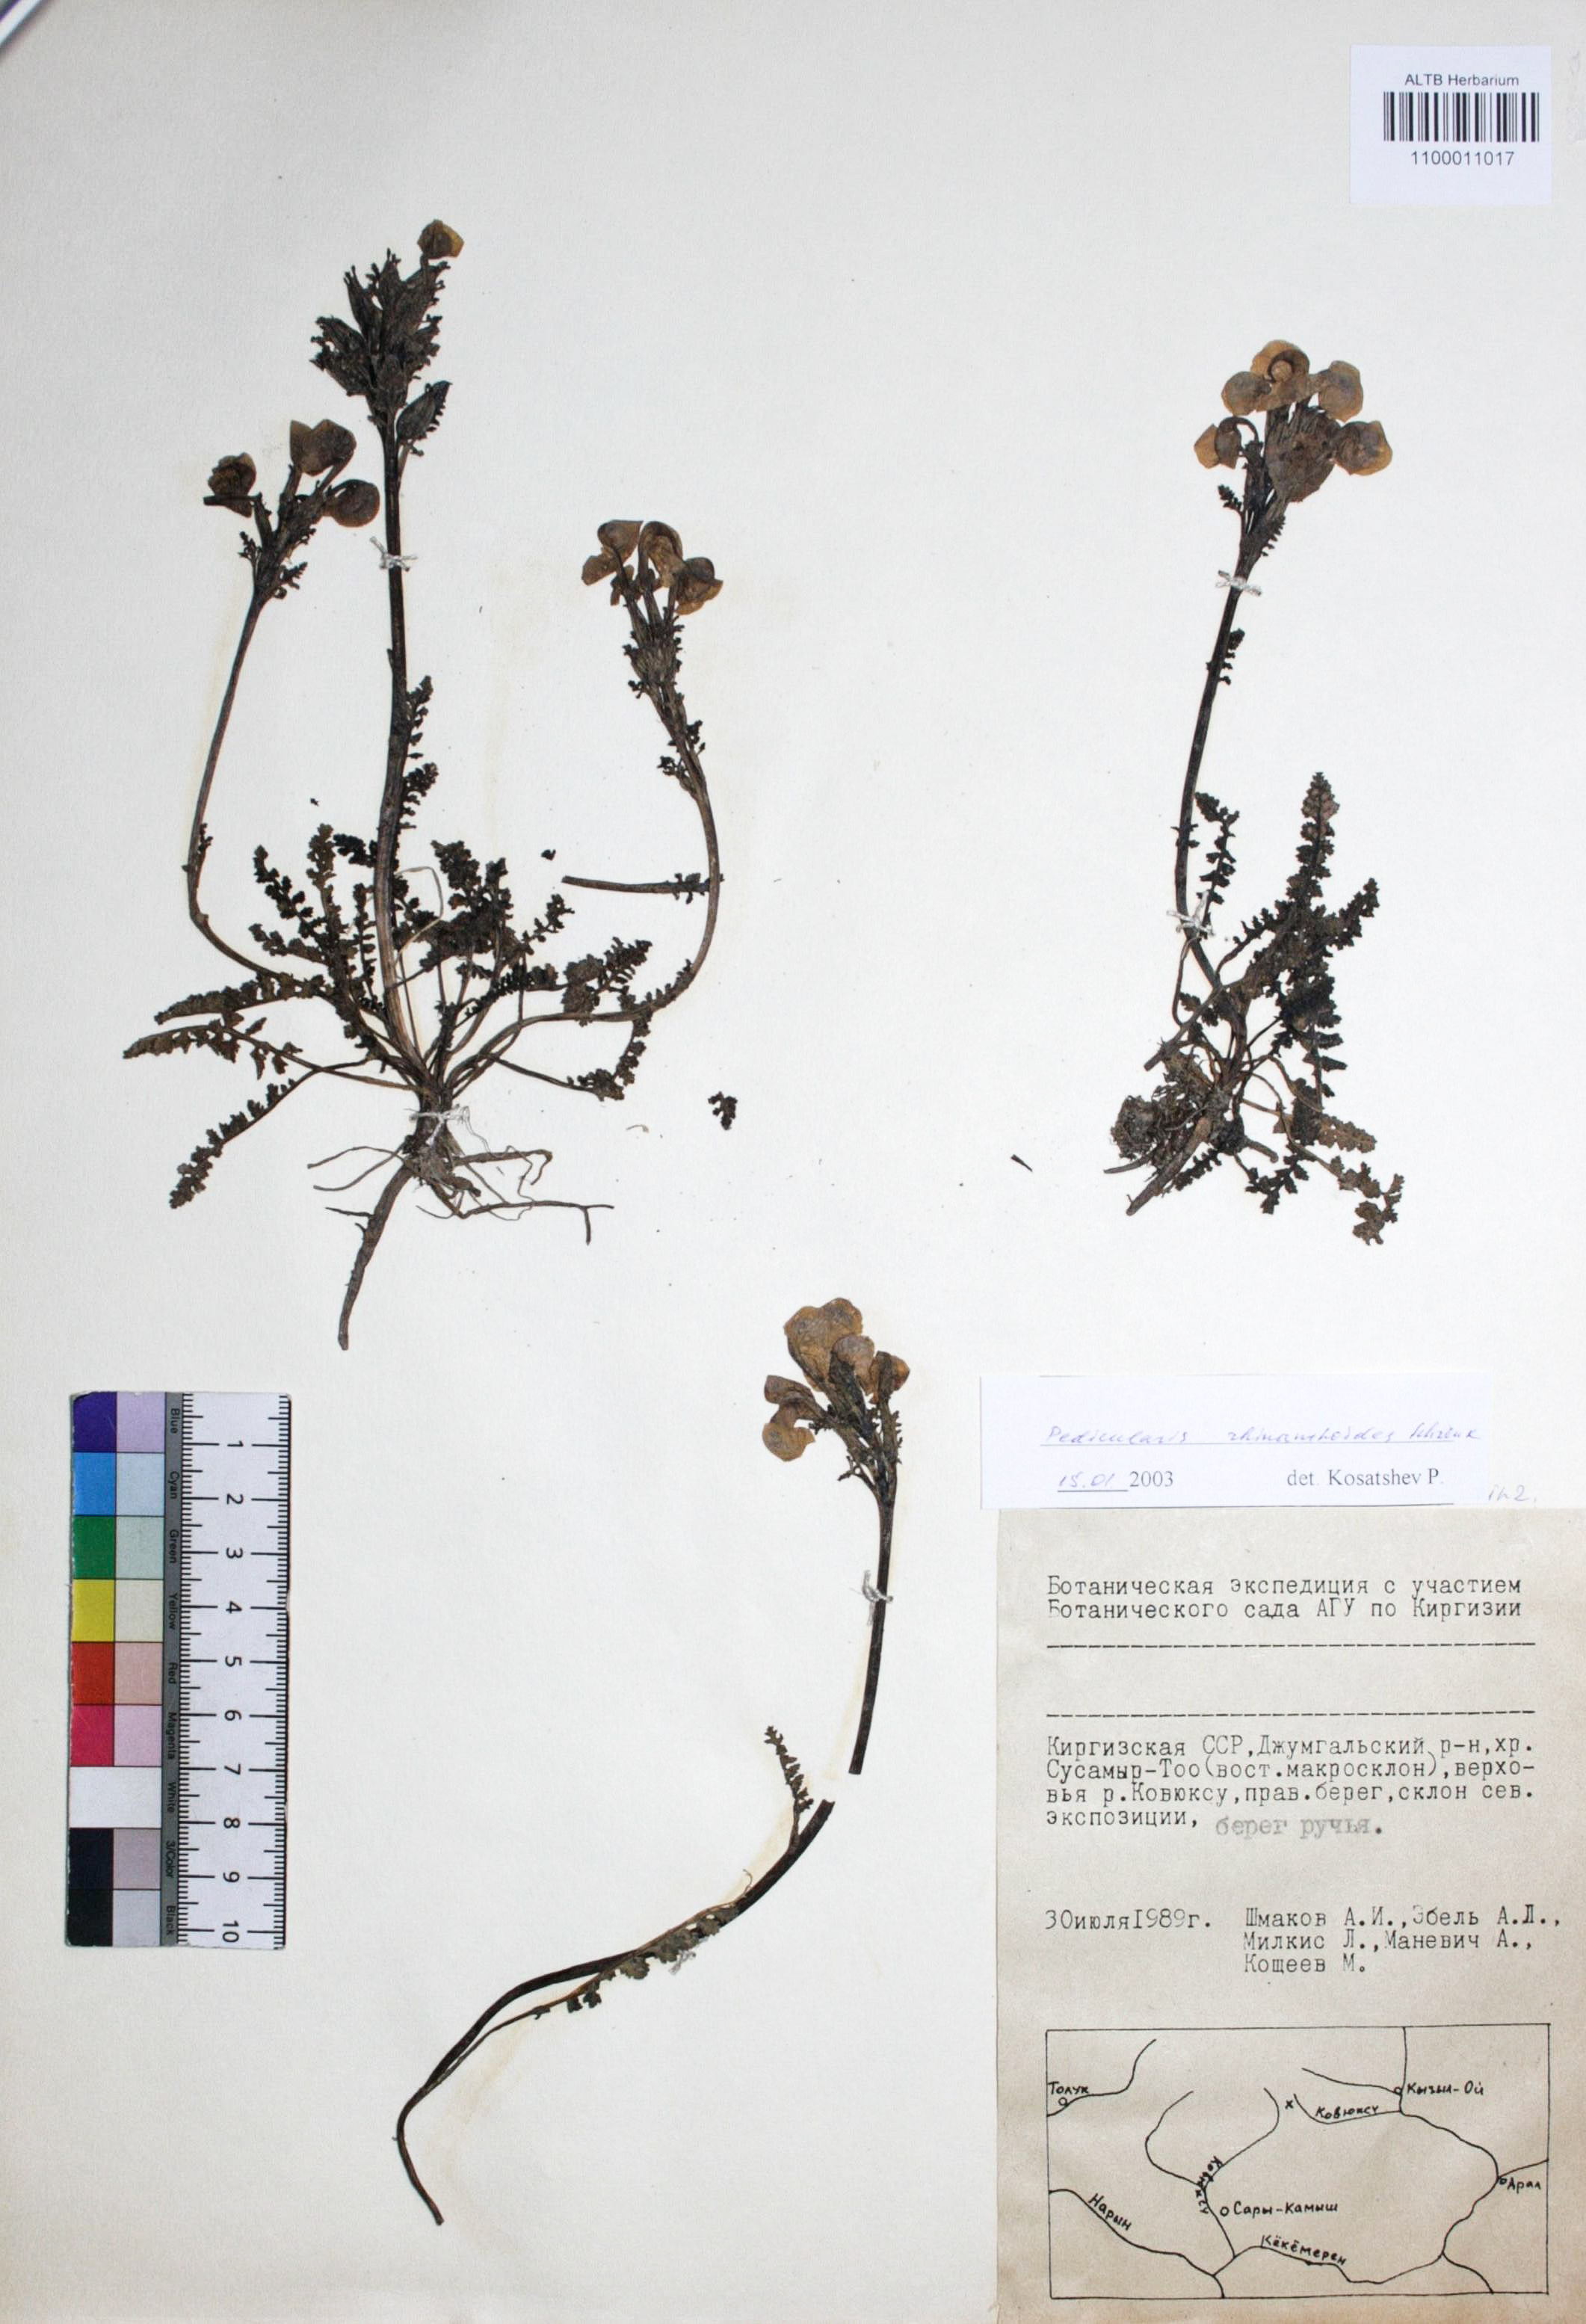 Pedicularis rhinanthoides Schrenk.